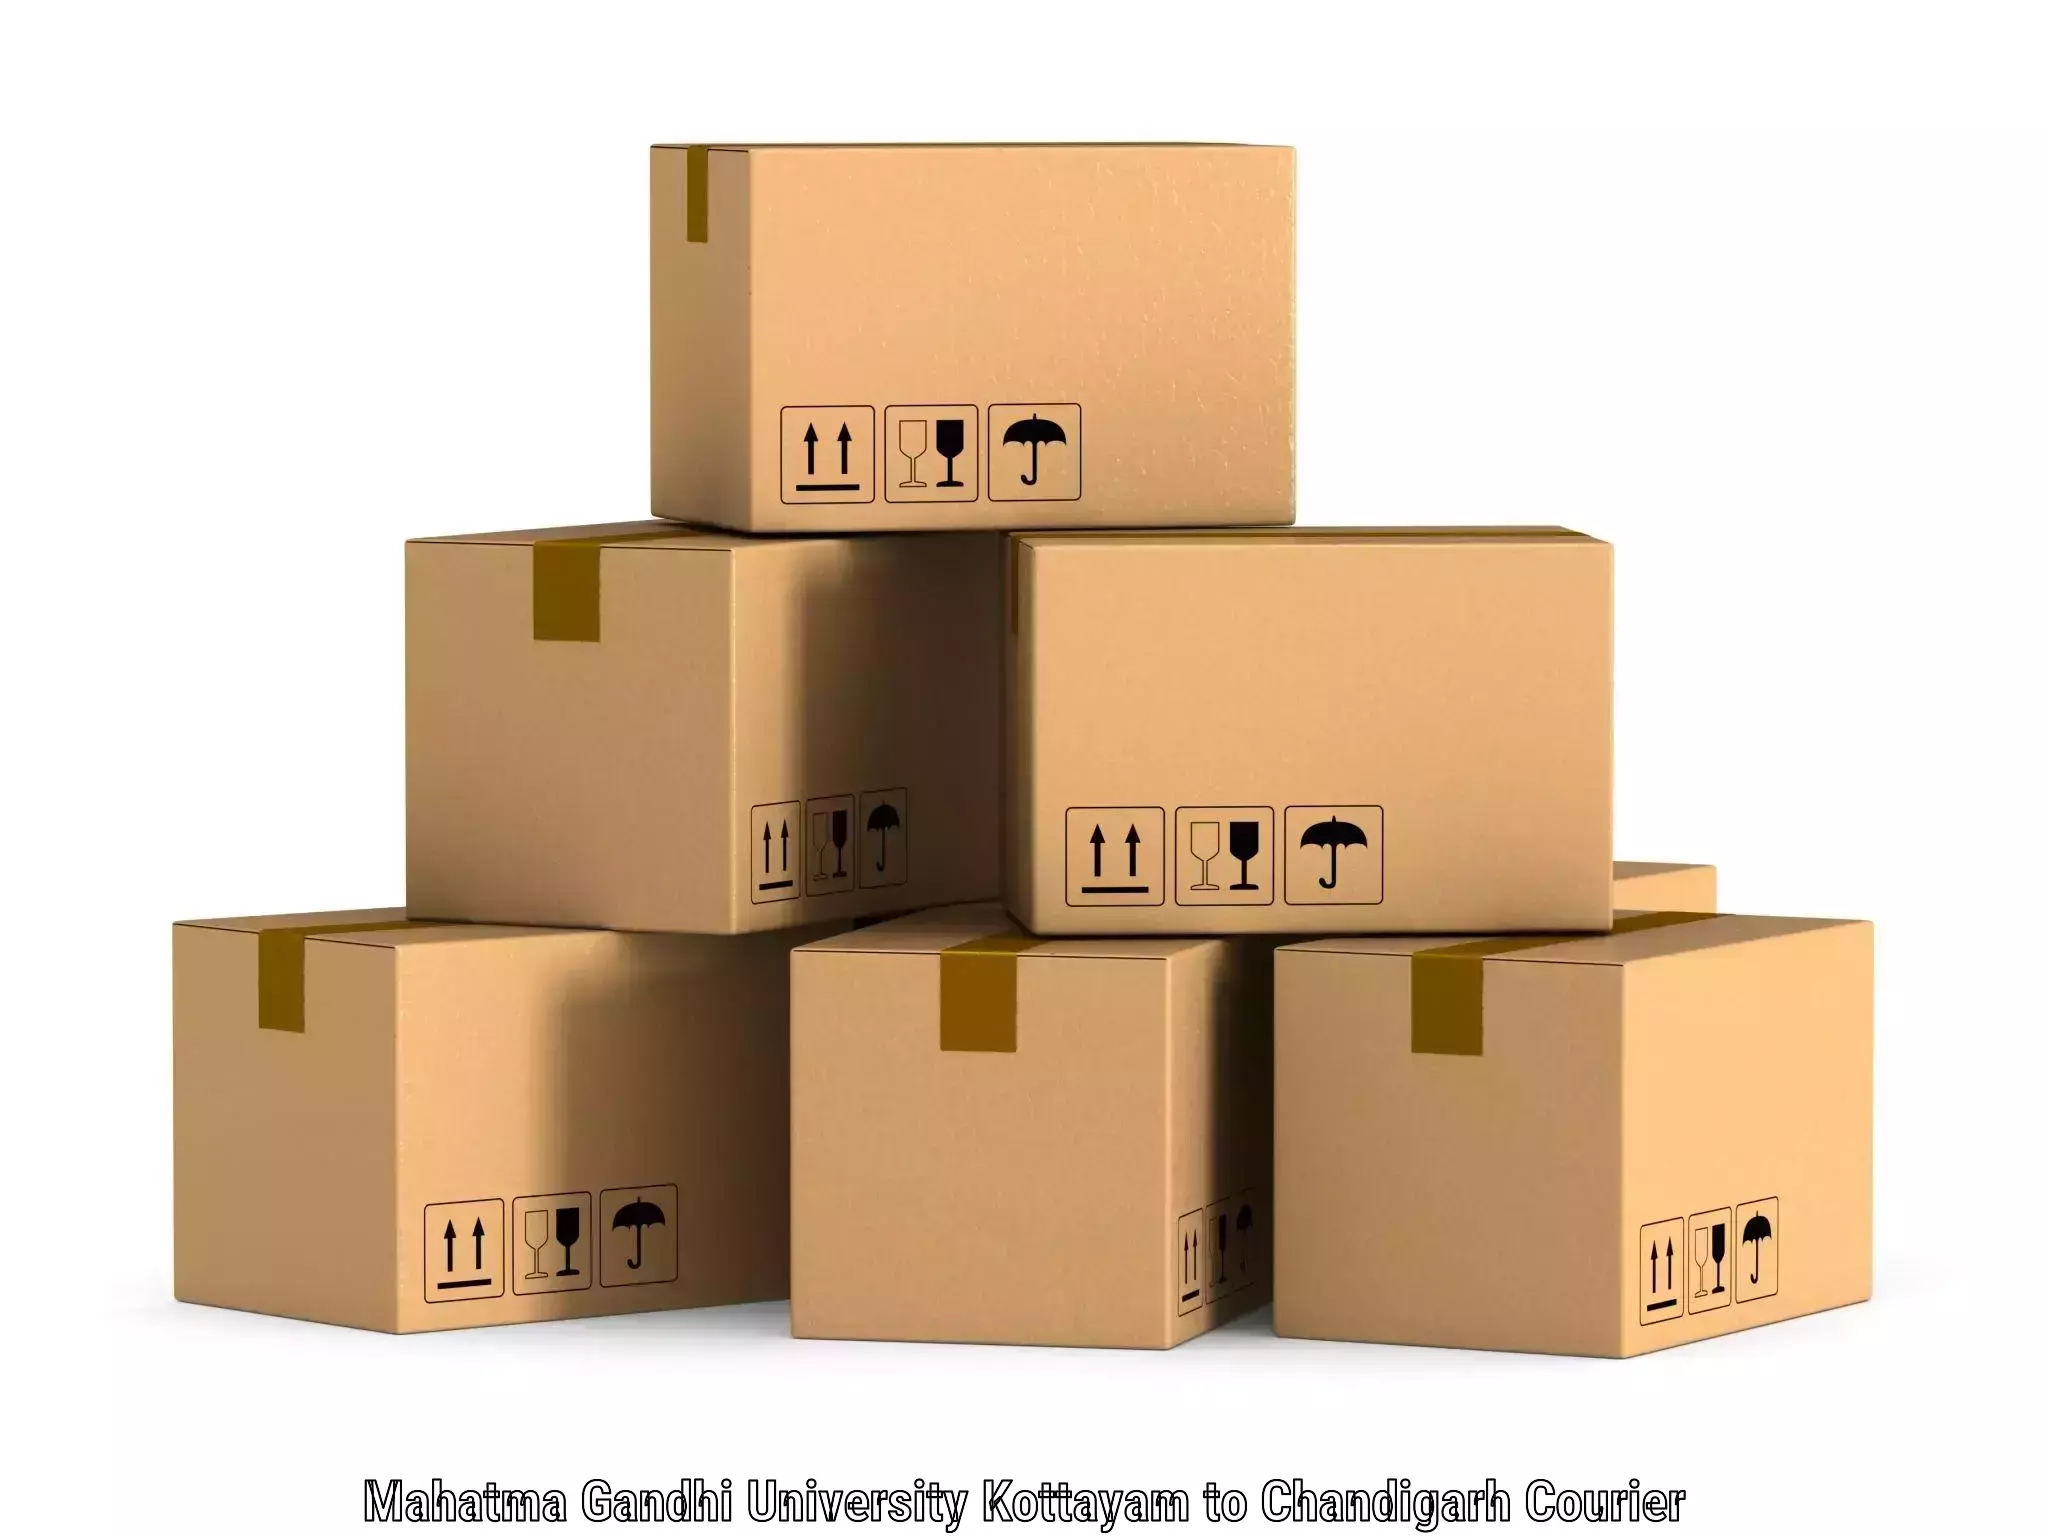 Package delivery network Mahatma Gandhi University Kottayam to Chandigarh